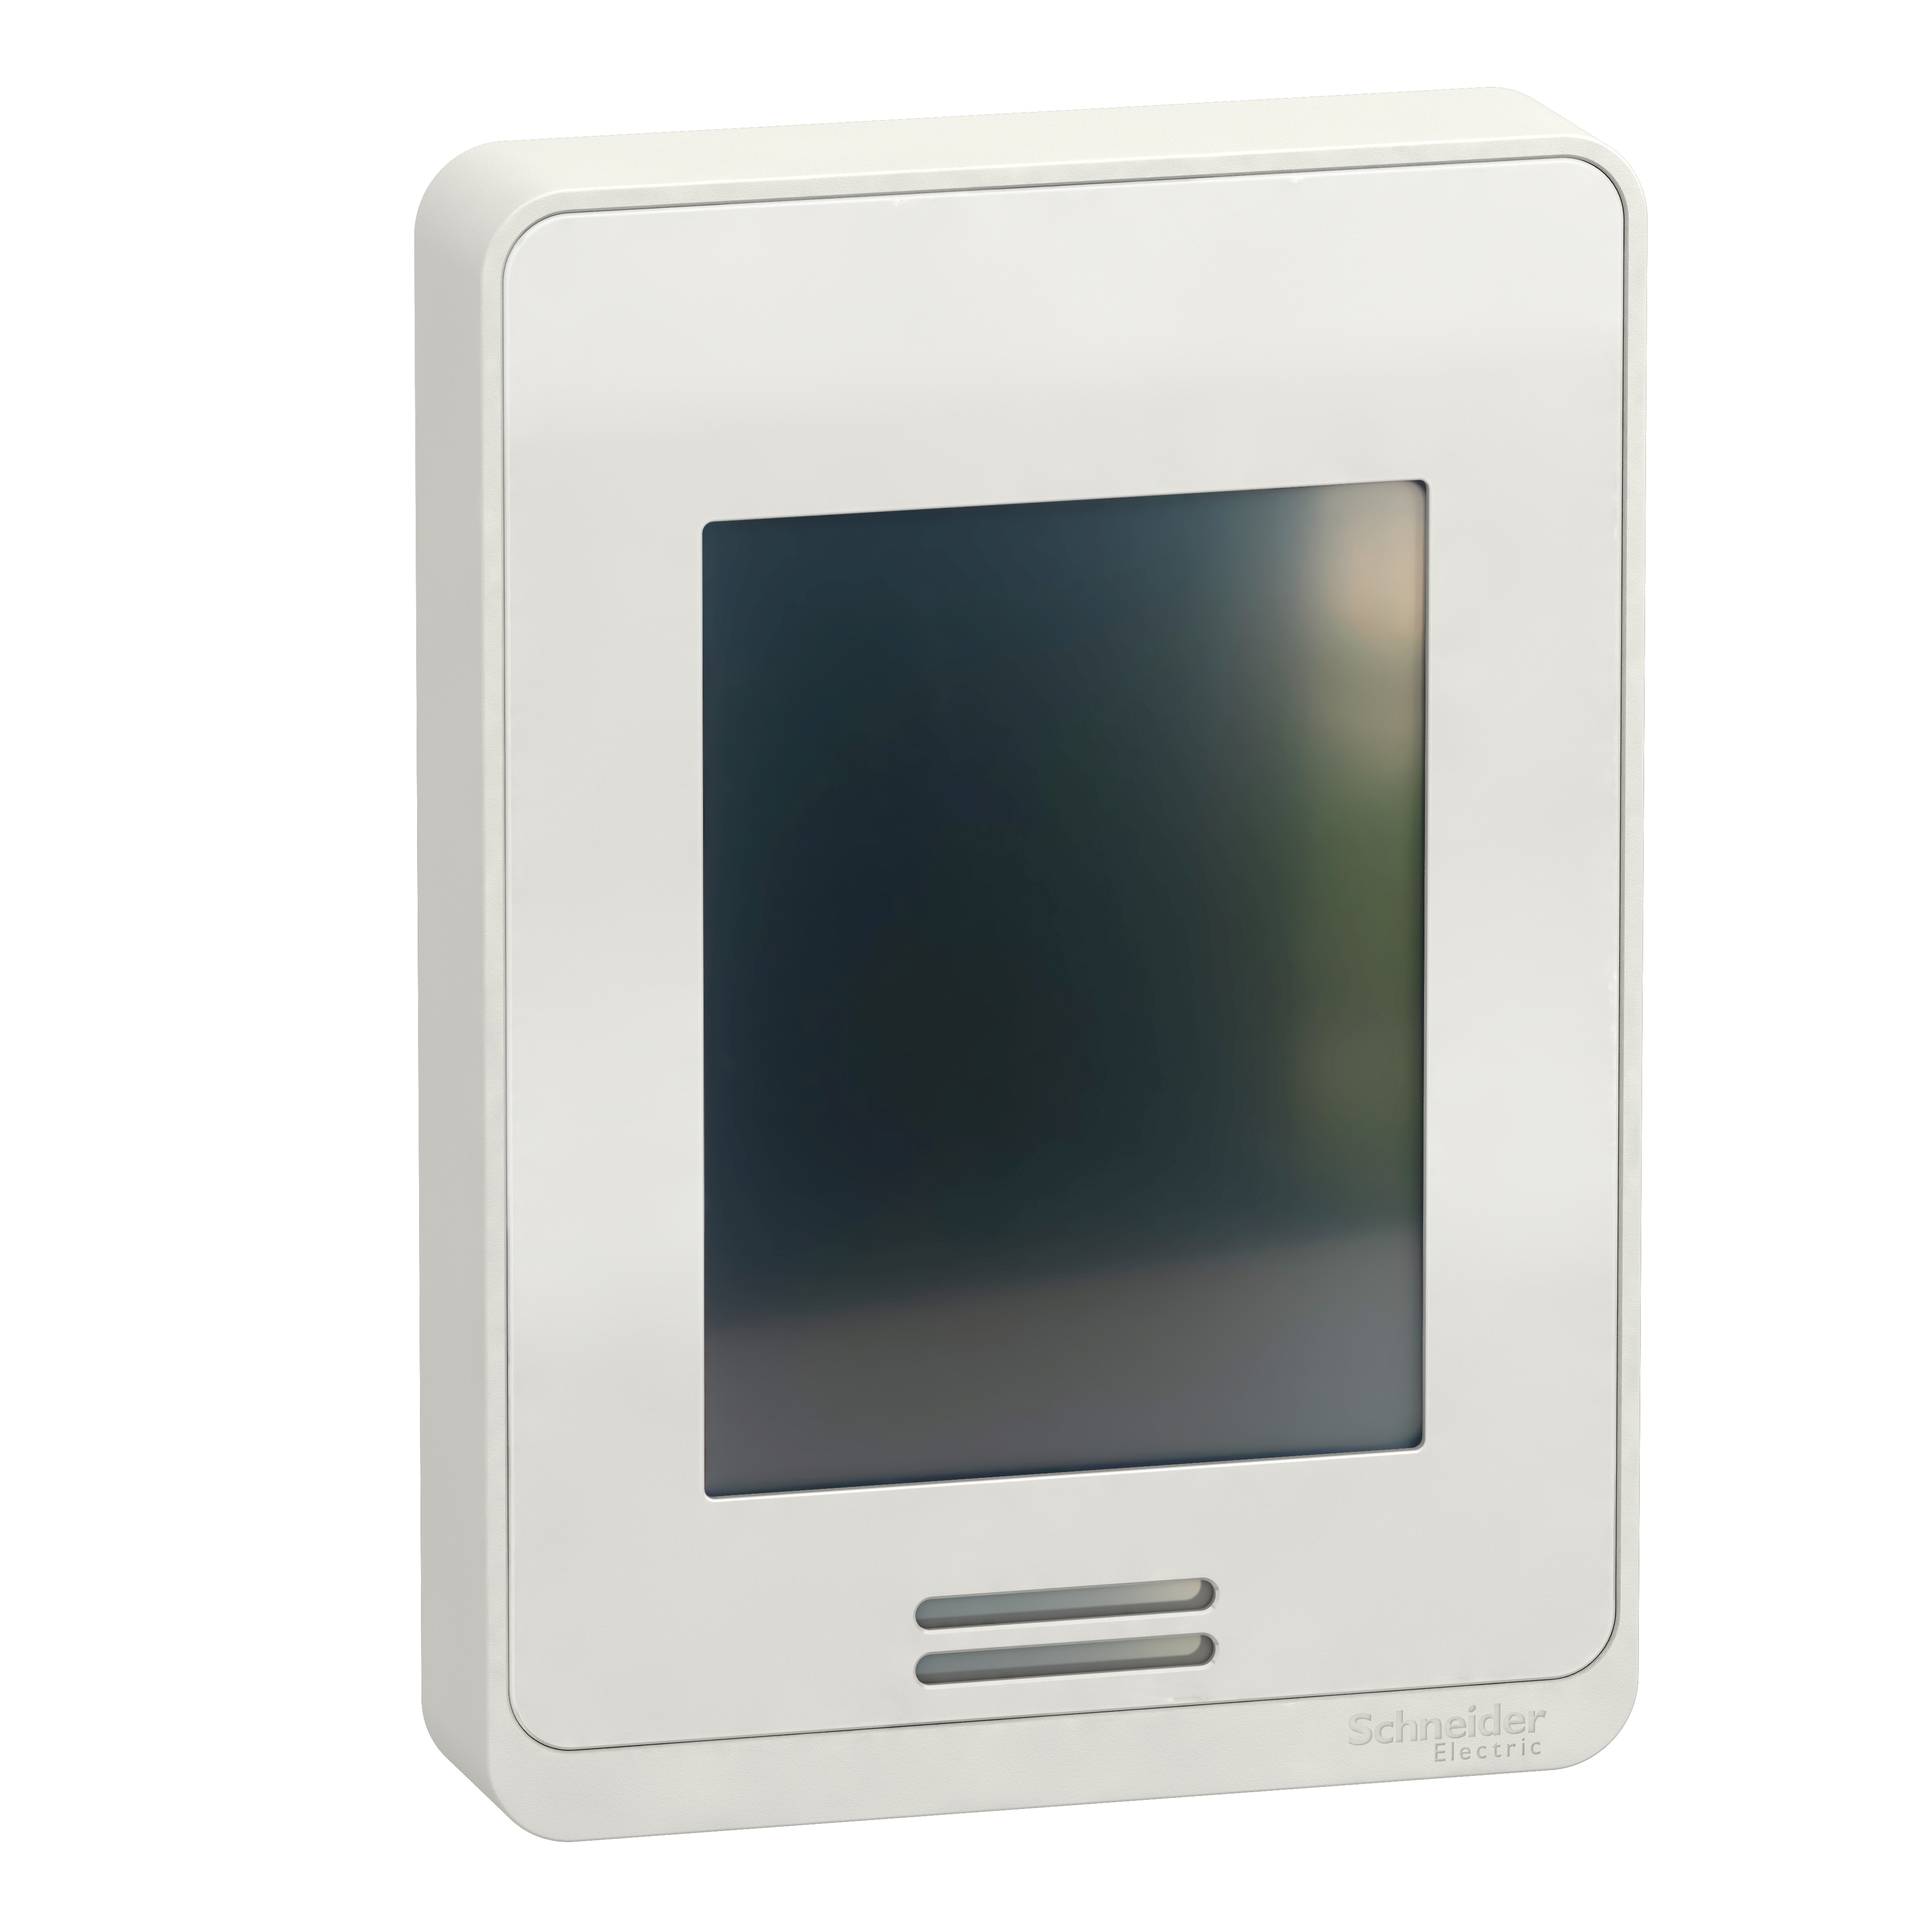 Modicon M172 Display Color TouchScreen, Temperature, Humidity, built-in sensors